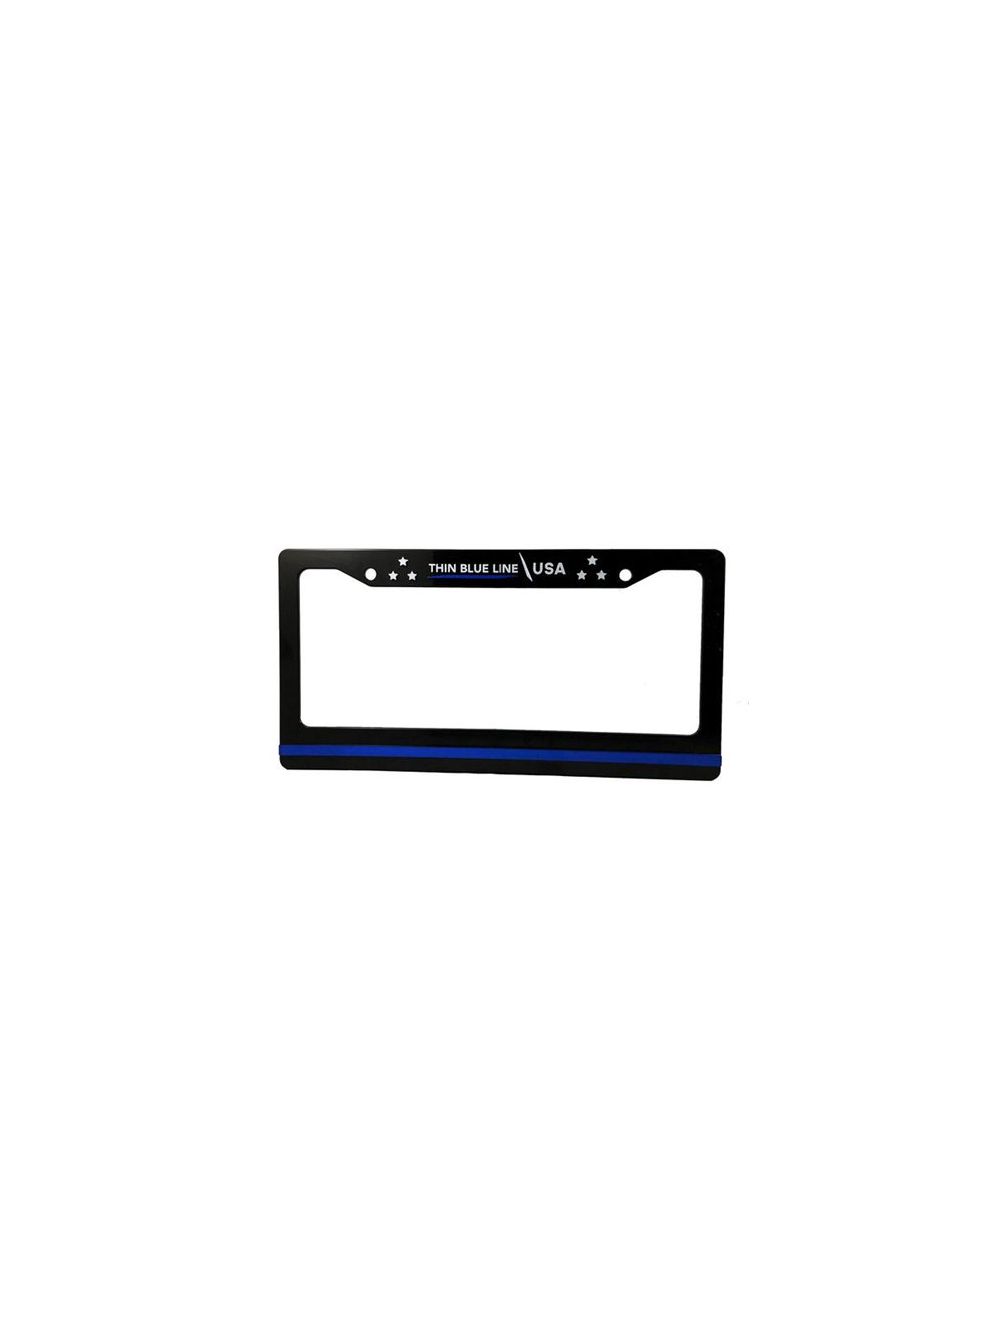 License Plate Frame - Thin Blue Line